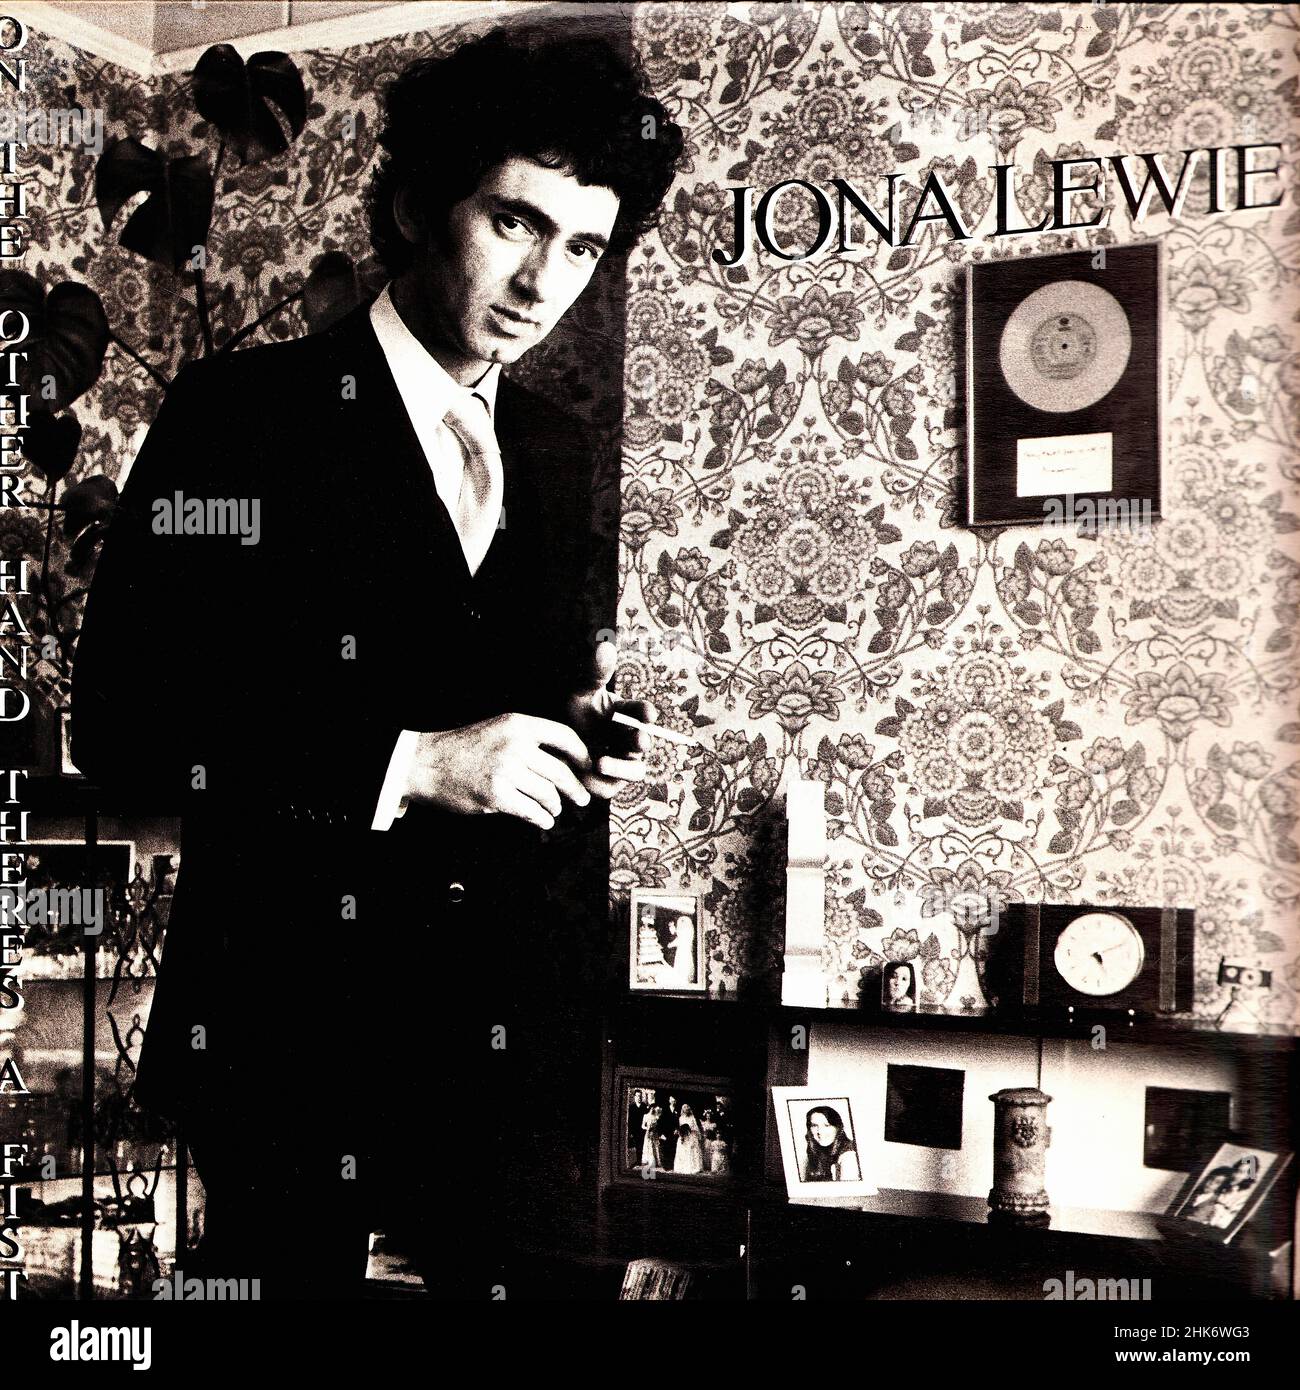 Copertina Vintage Vinyl record - Lewie, Jona - D'altra parte c'è Un pugno - SEEZ 8 - UK - 1978 k Foto Stock